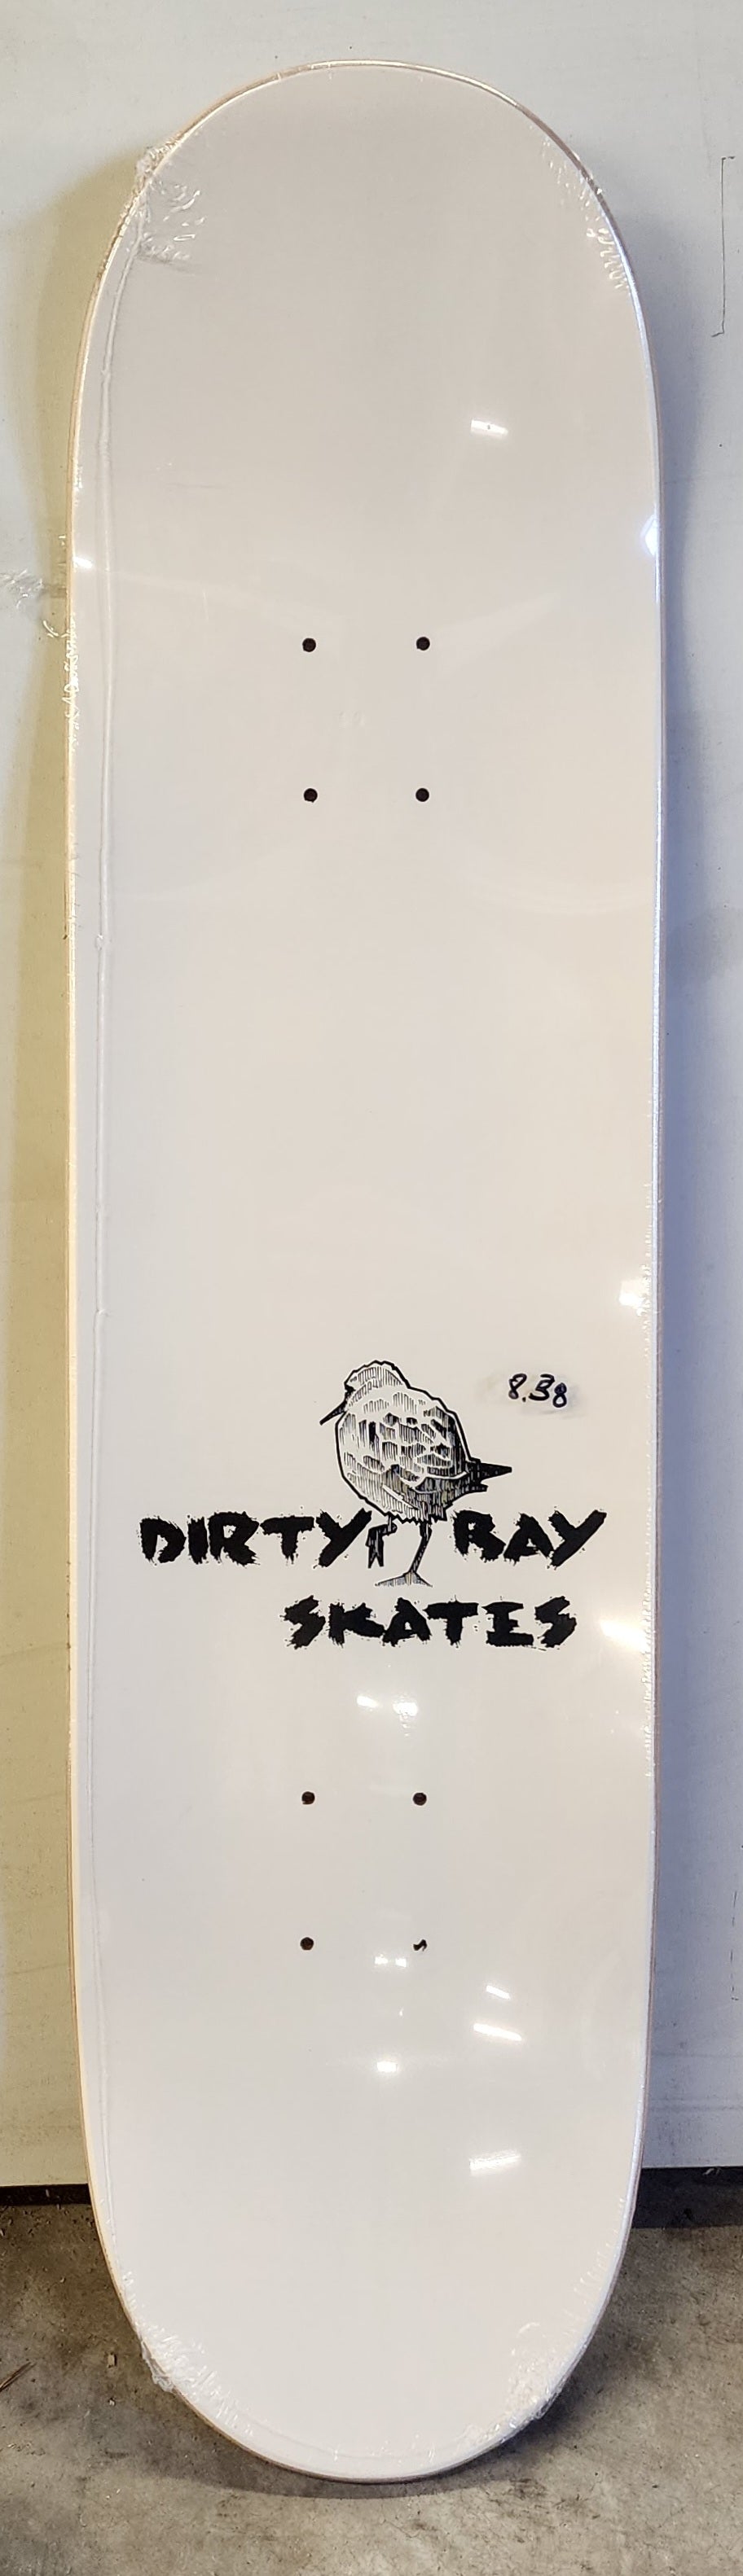 Dirty Bay Skateboards - Bull Deck 8.38